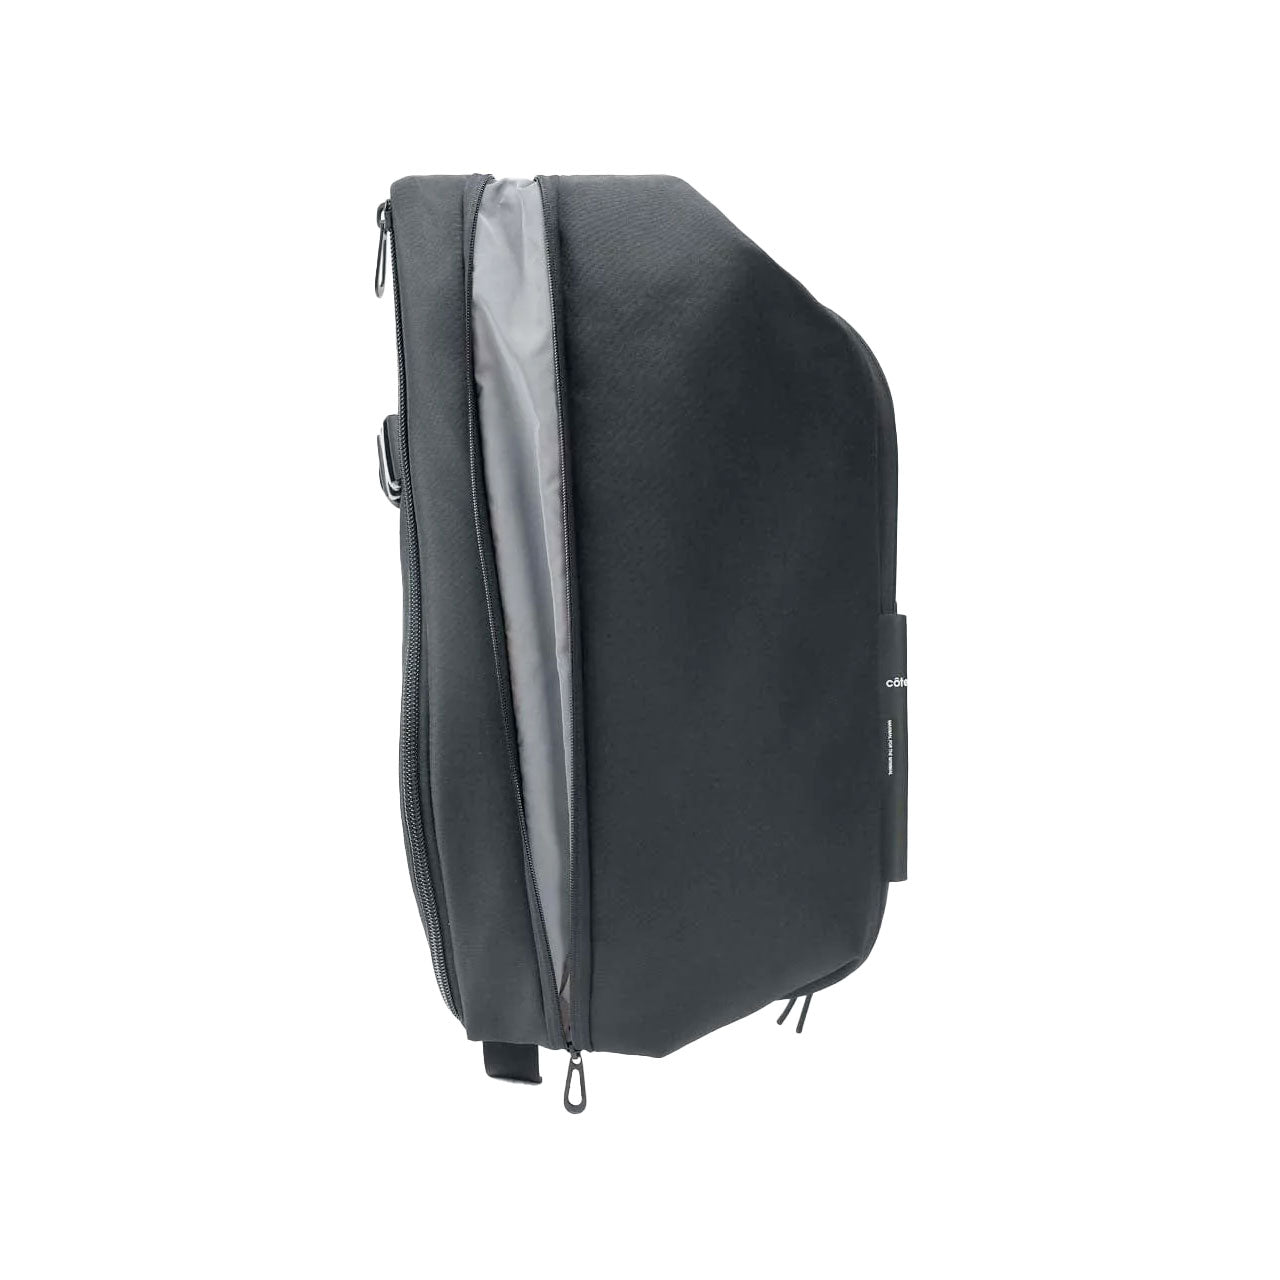 côte&ciel isar air reflective backpack (black) 28974-000-001 - a.plus